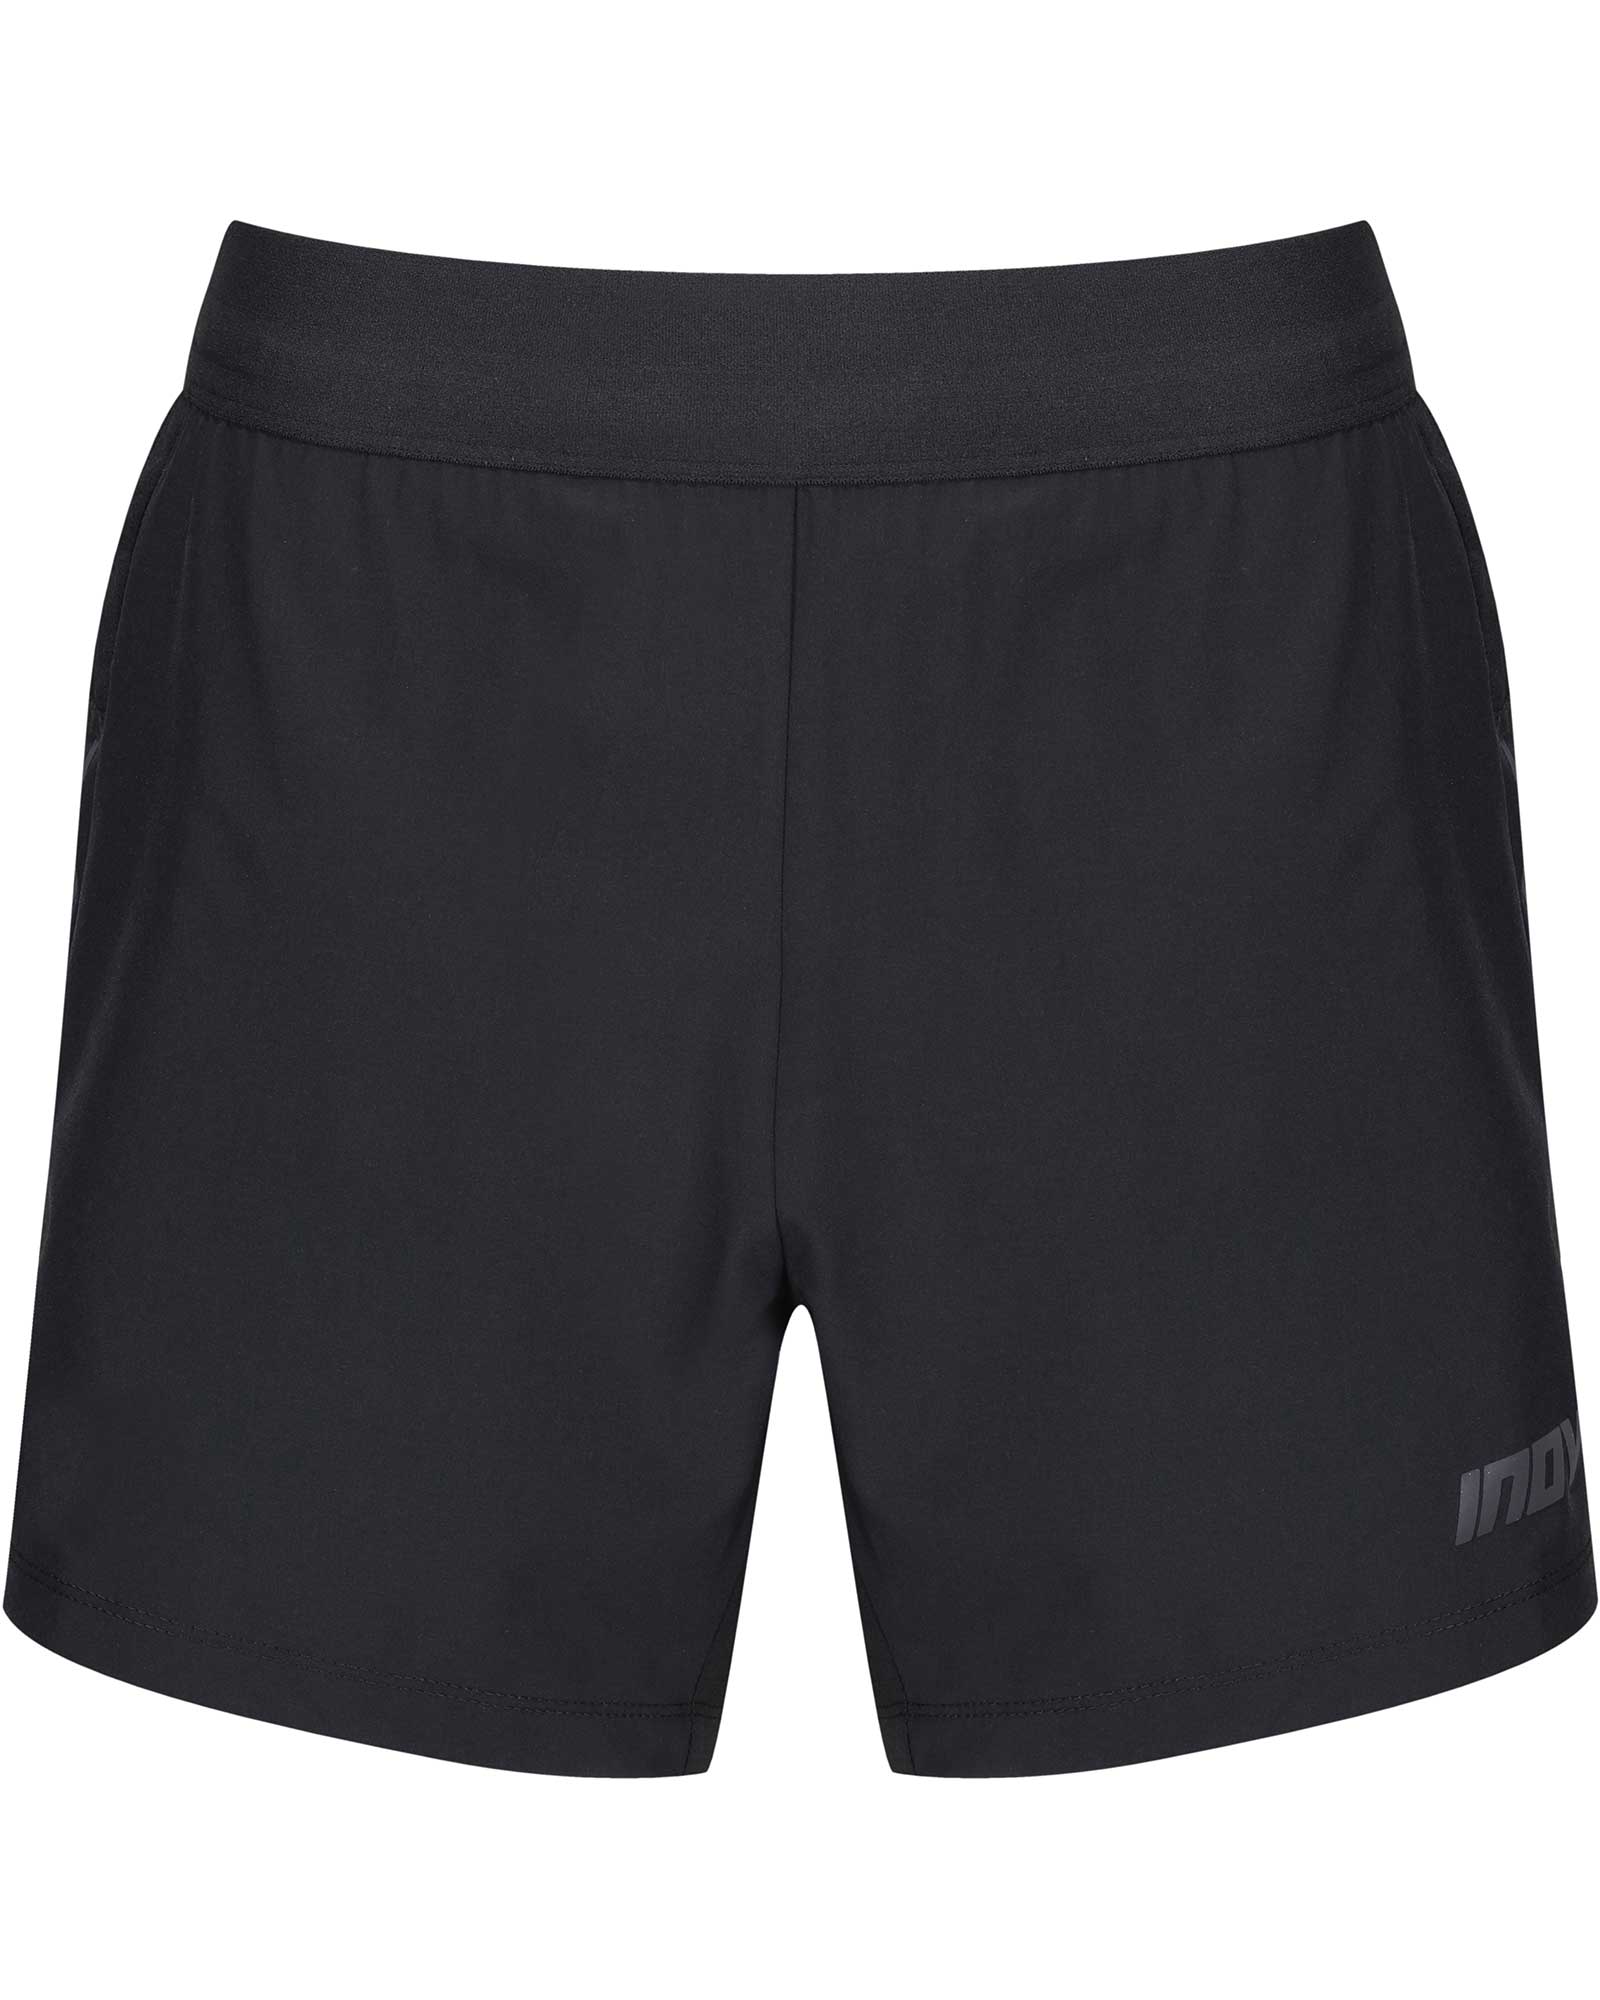 Inov 8 Race Elite Men’s 5" Shorts - black XL